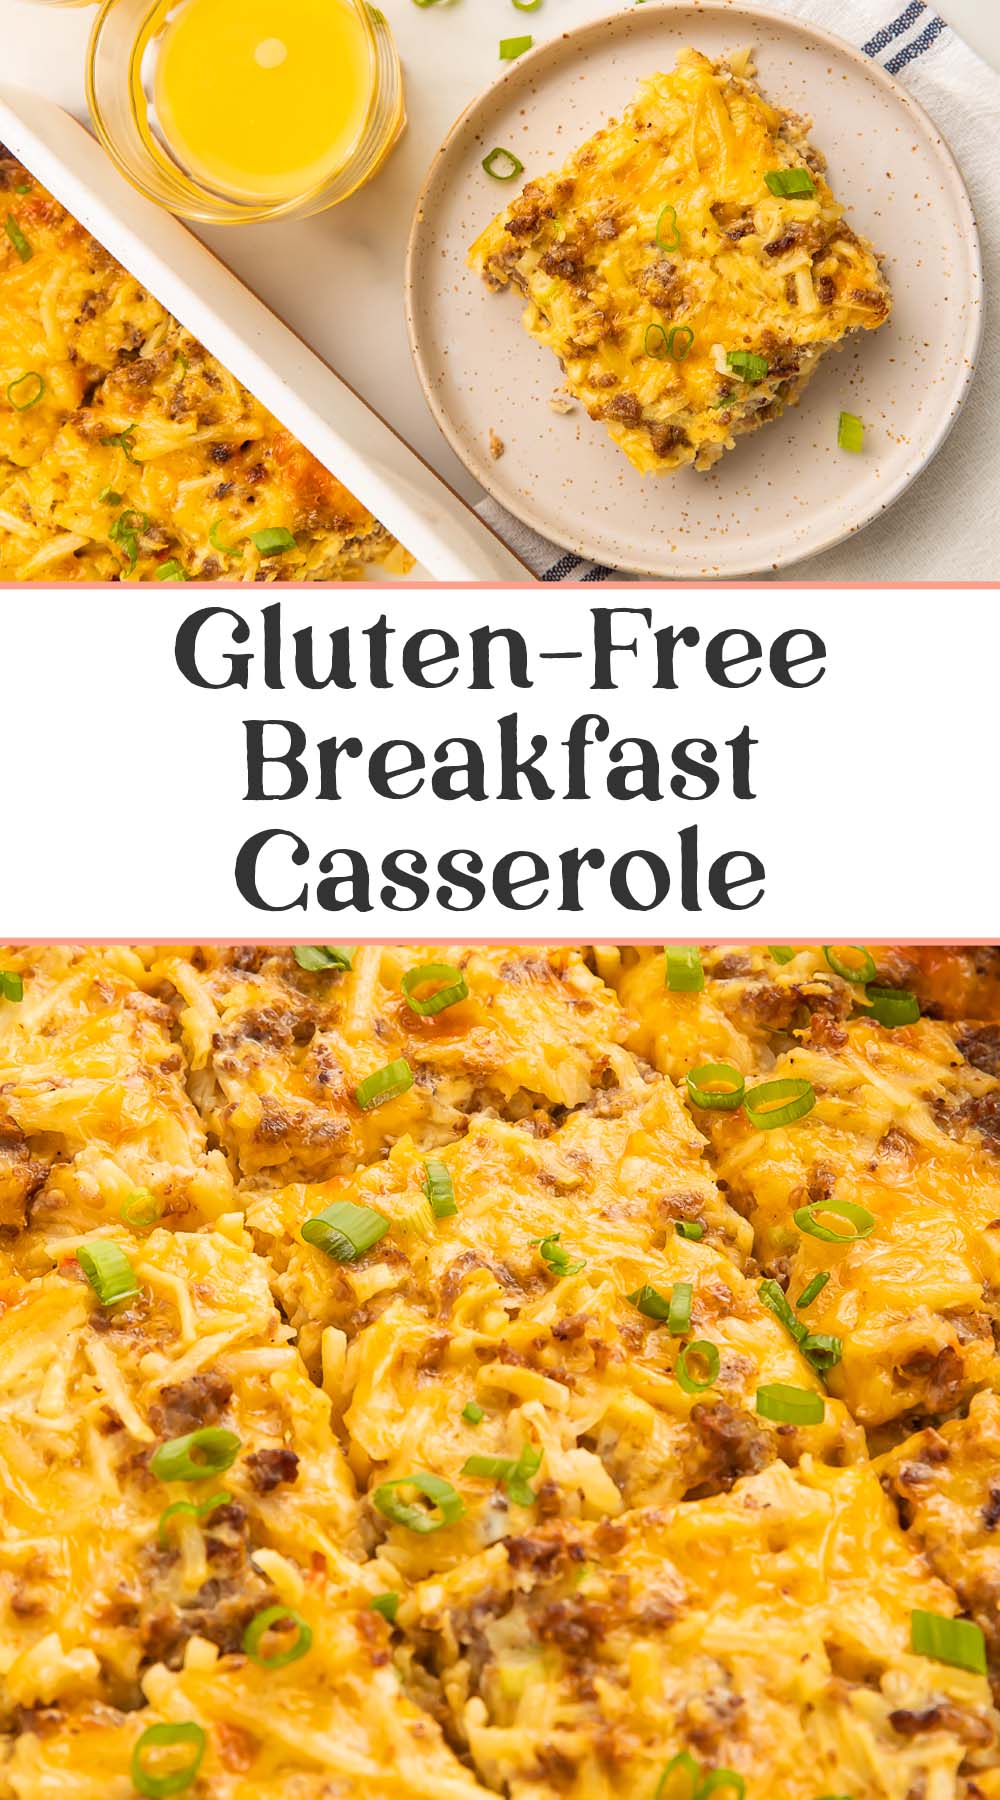 Pin graphic for gluten-free breakfast casserole.